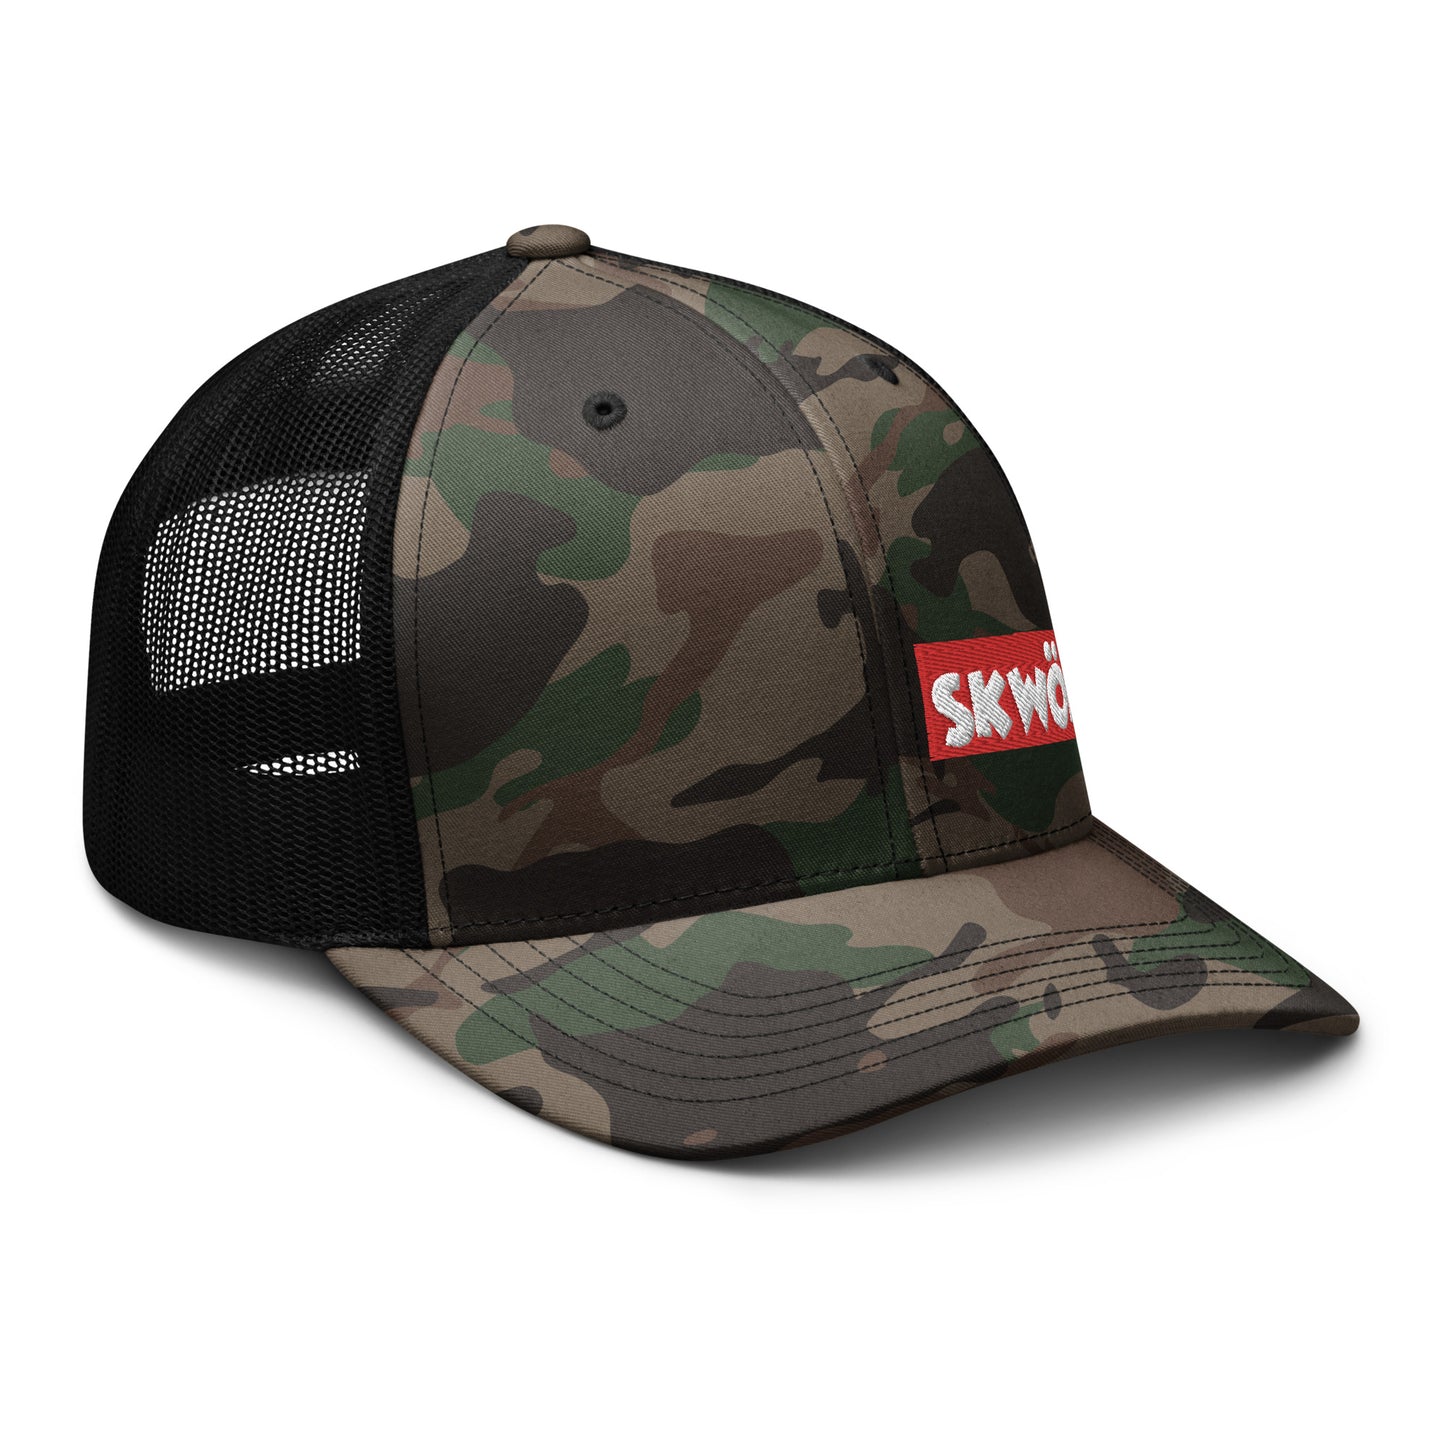 Skwok Brand / Hat / Traditional / OG Logo / Red Box Logo / Camouflage